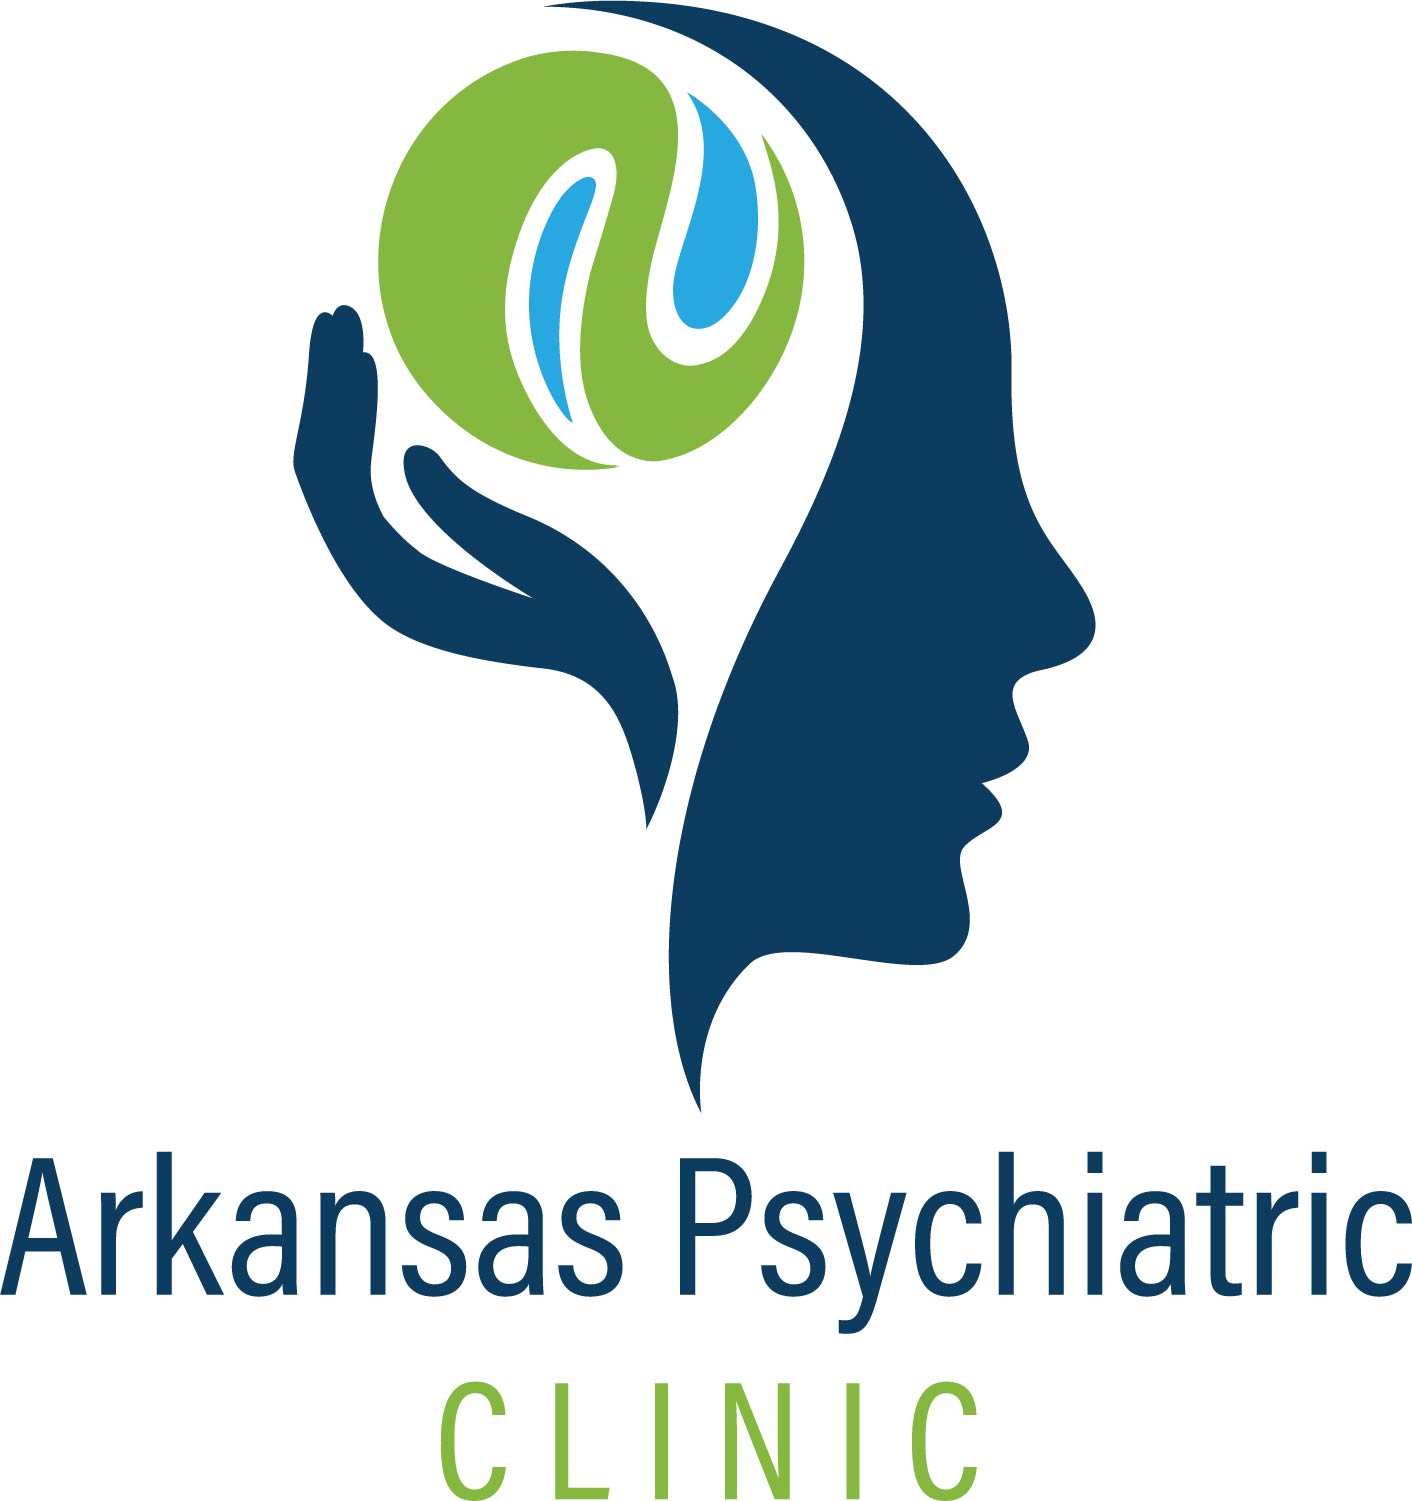 Arkansas Psychiatric Clinic logo